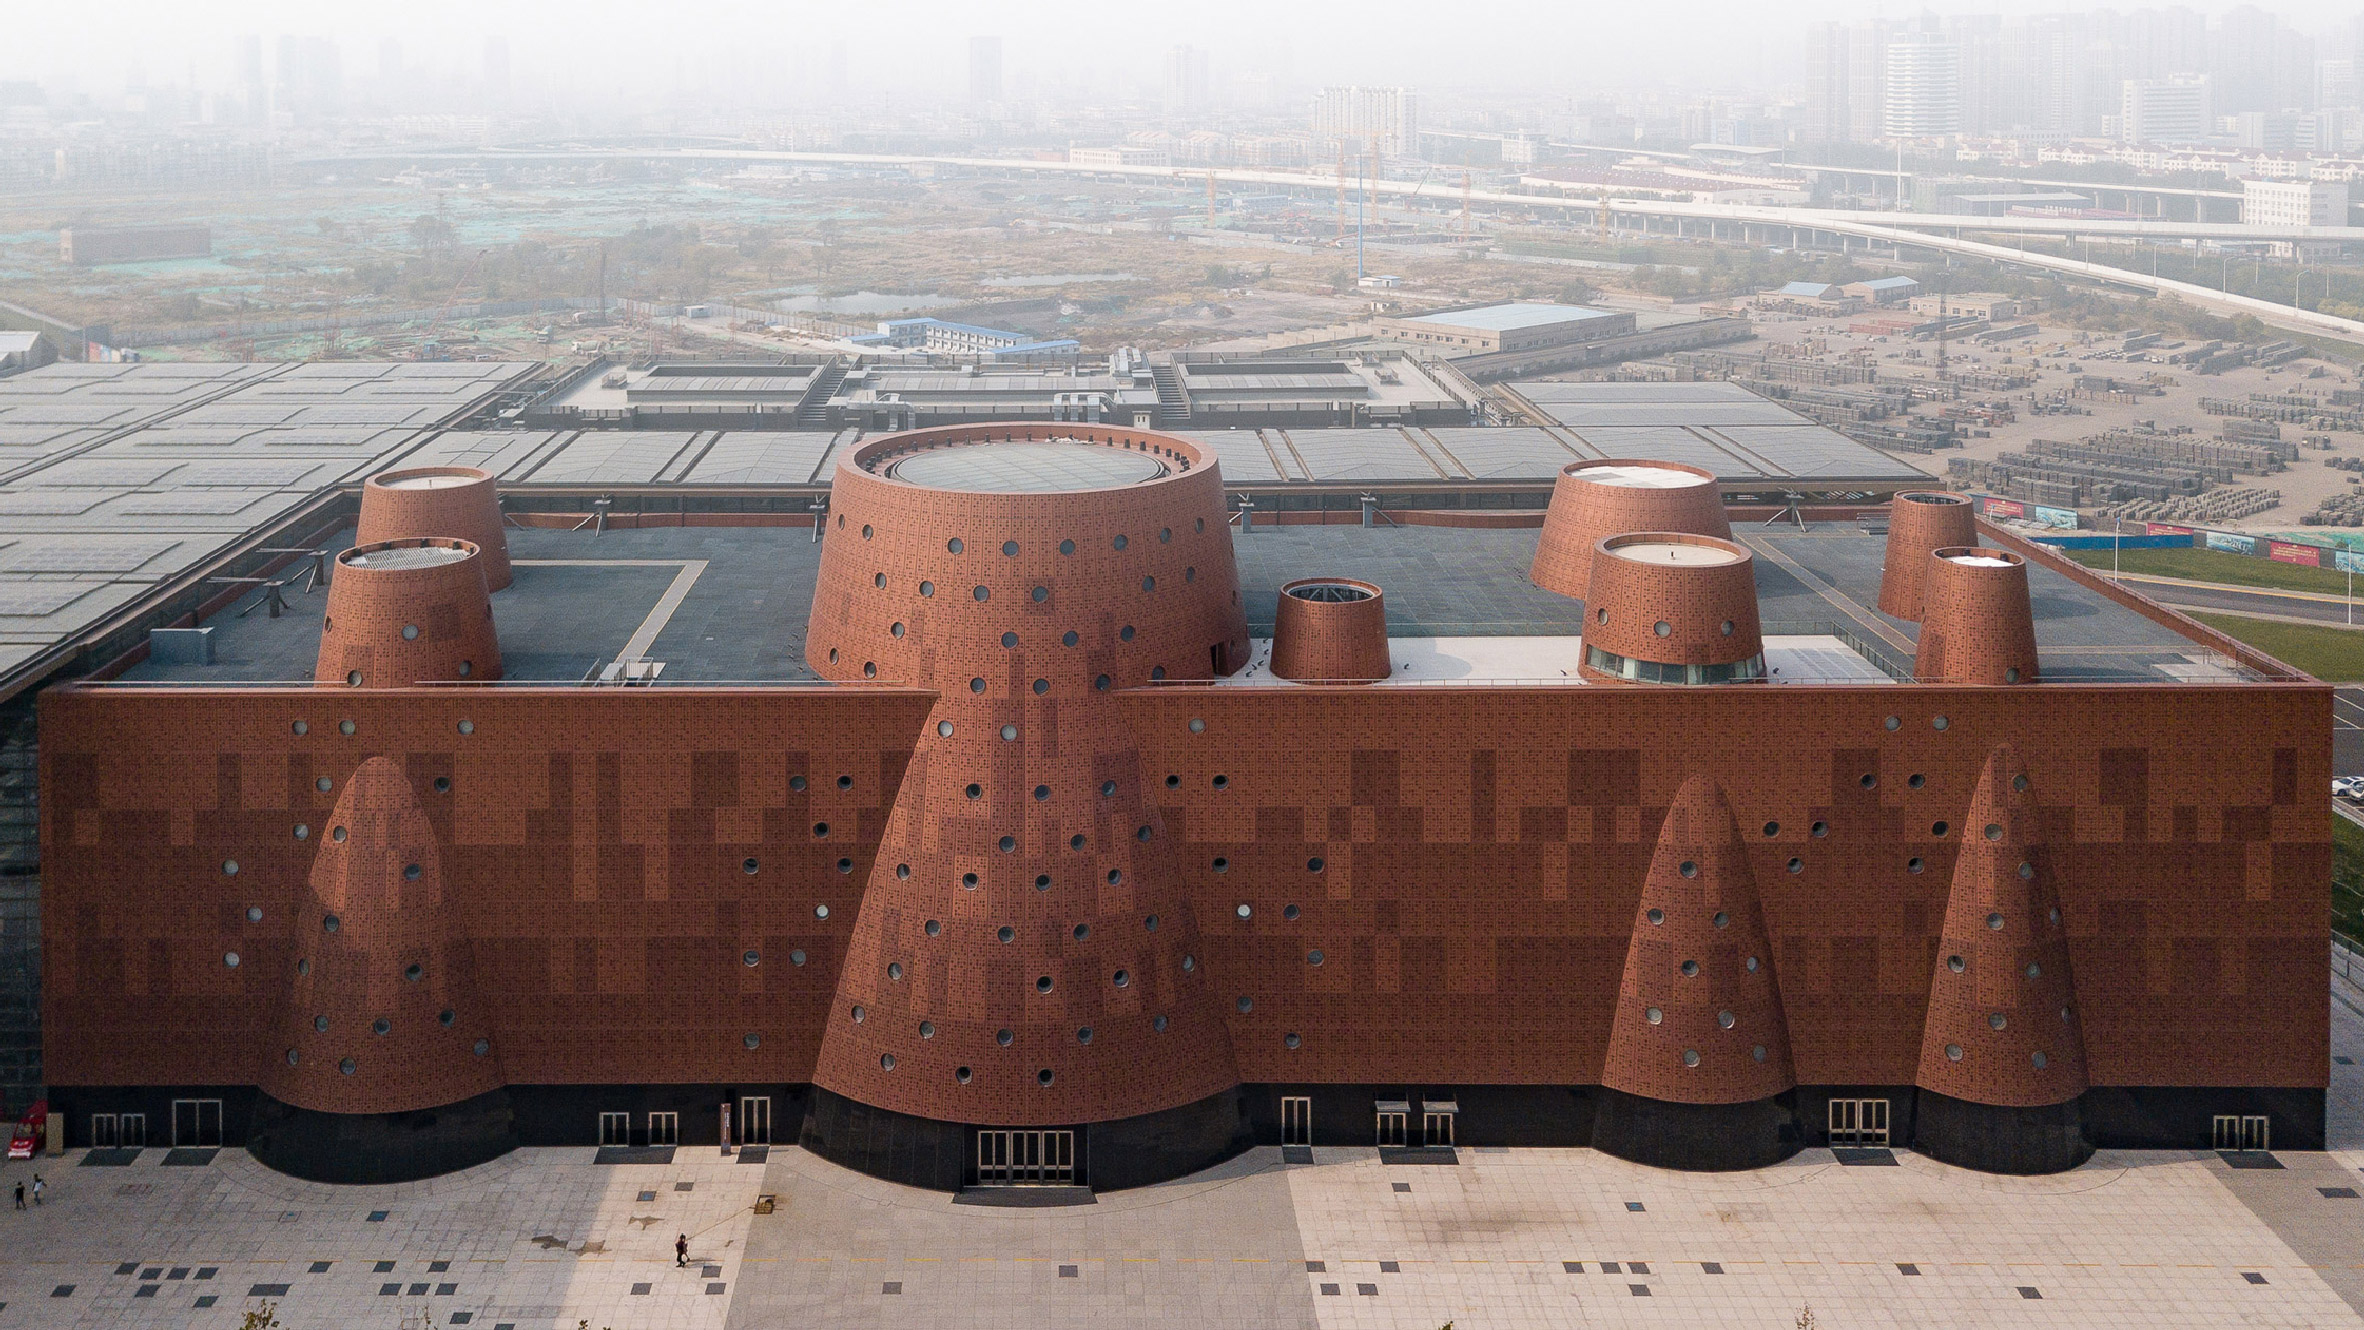 Exploratorium museum by Bernard Tschumi Architects